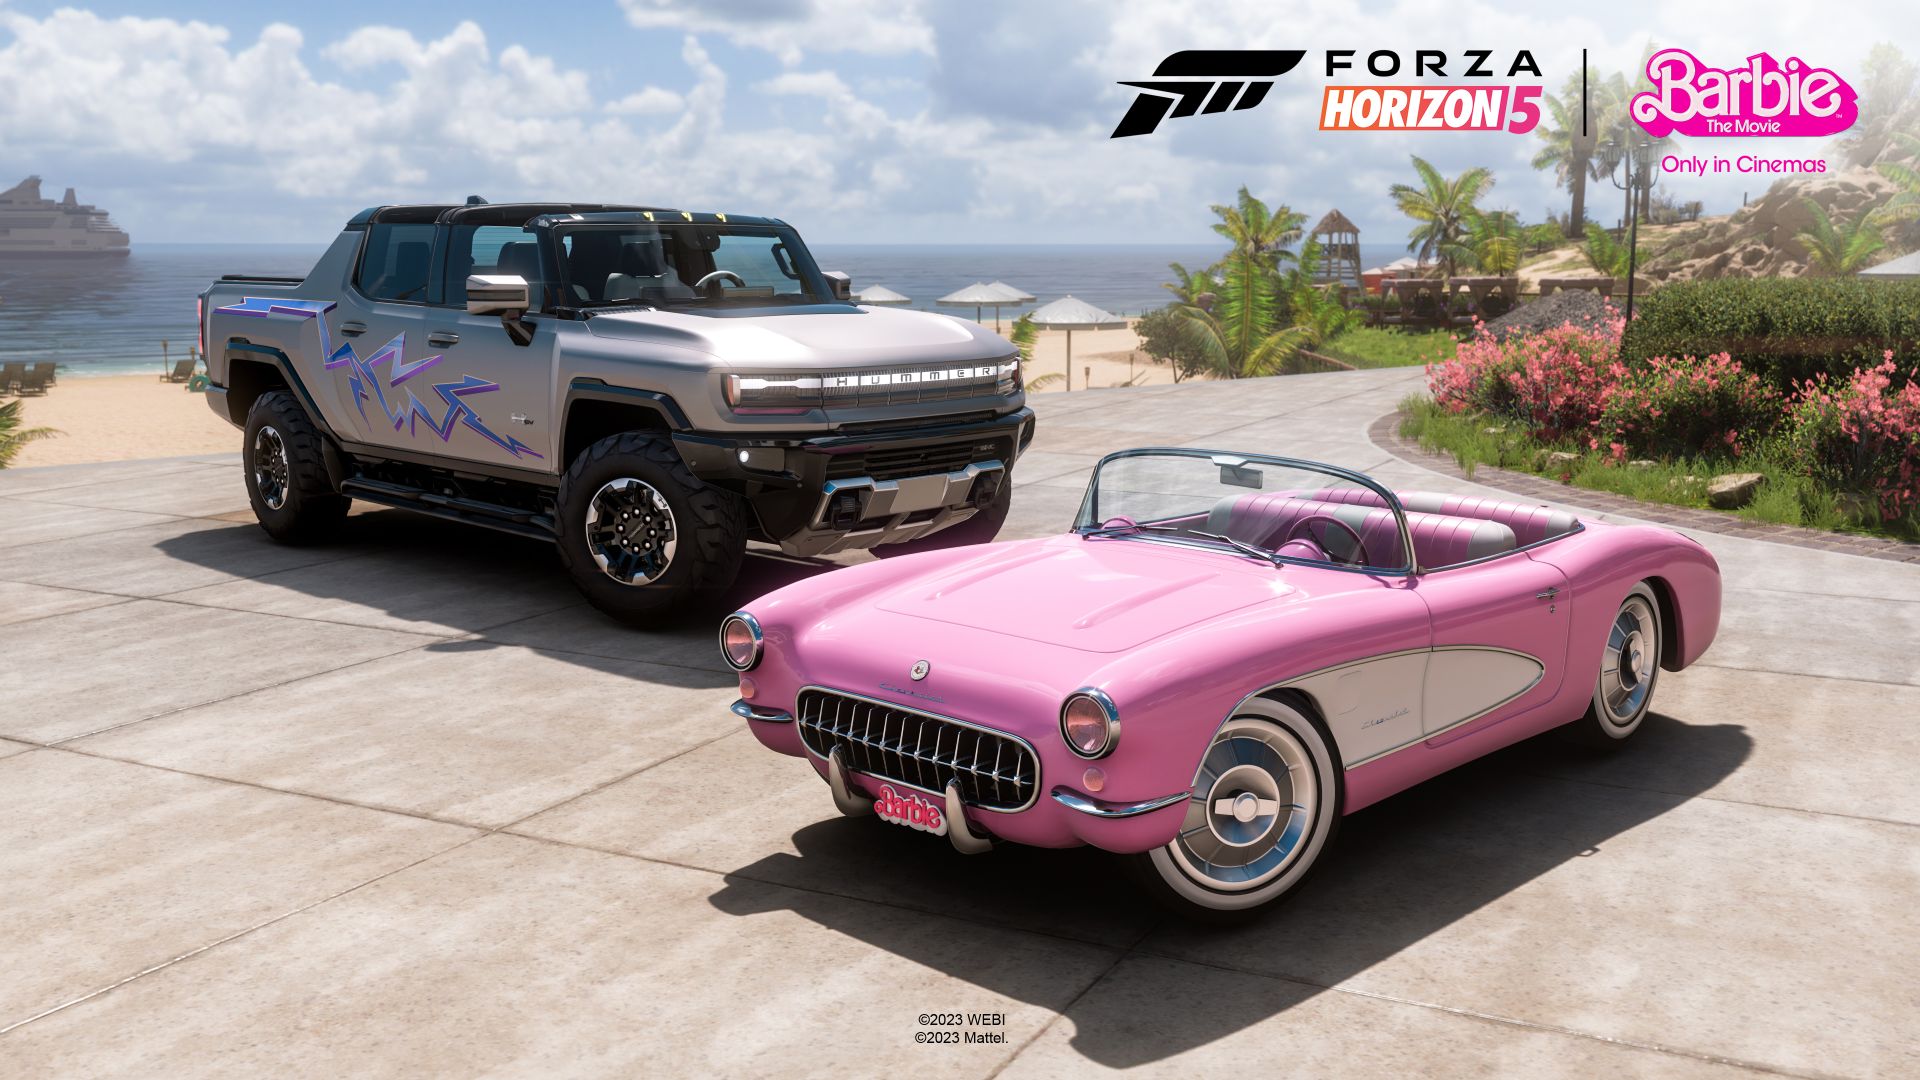 Game Pass Forza Horizon 5 Barbie